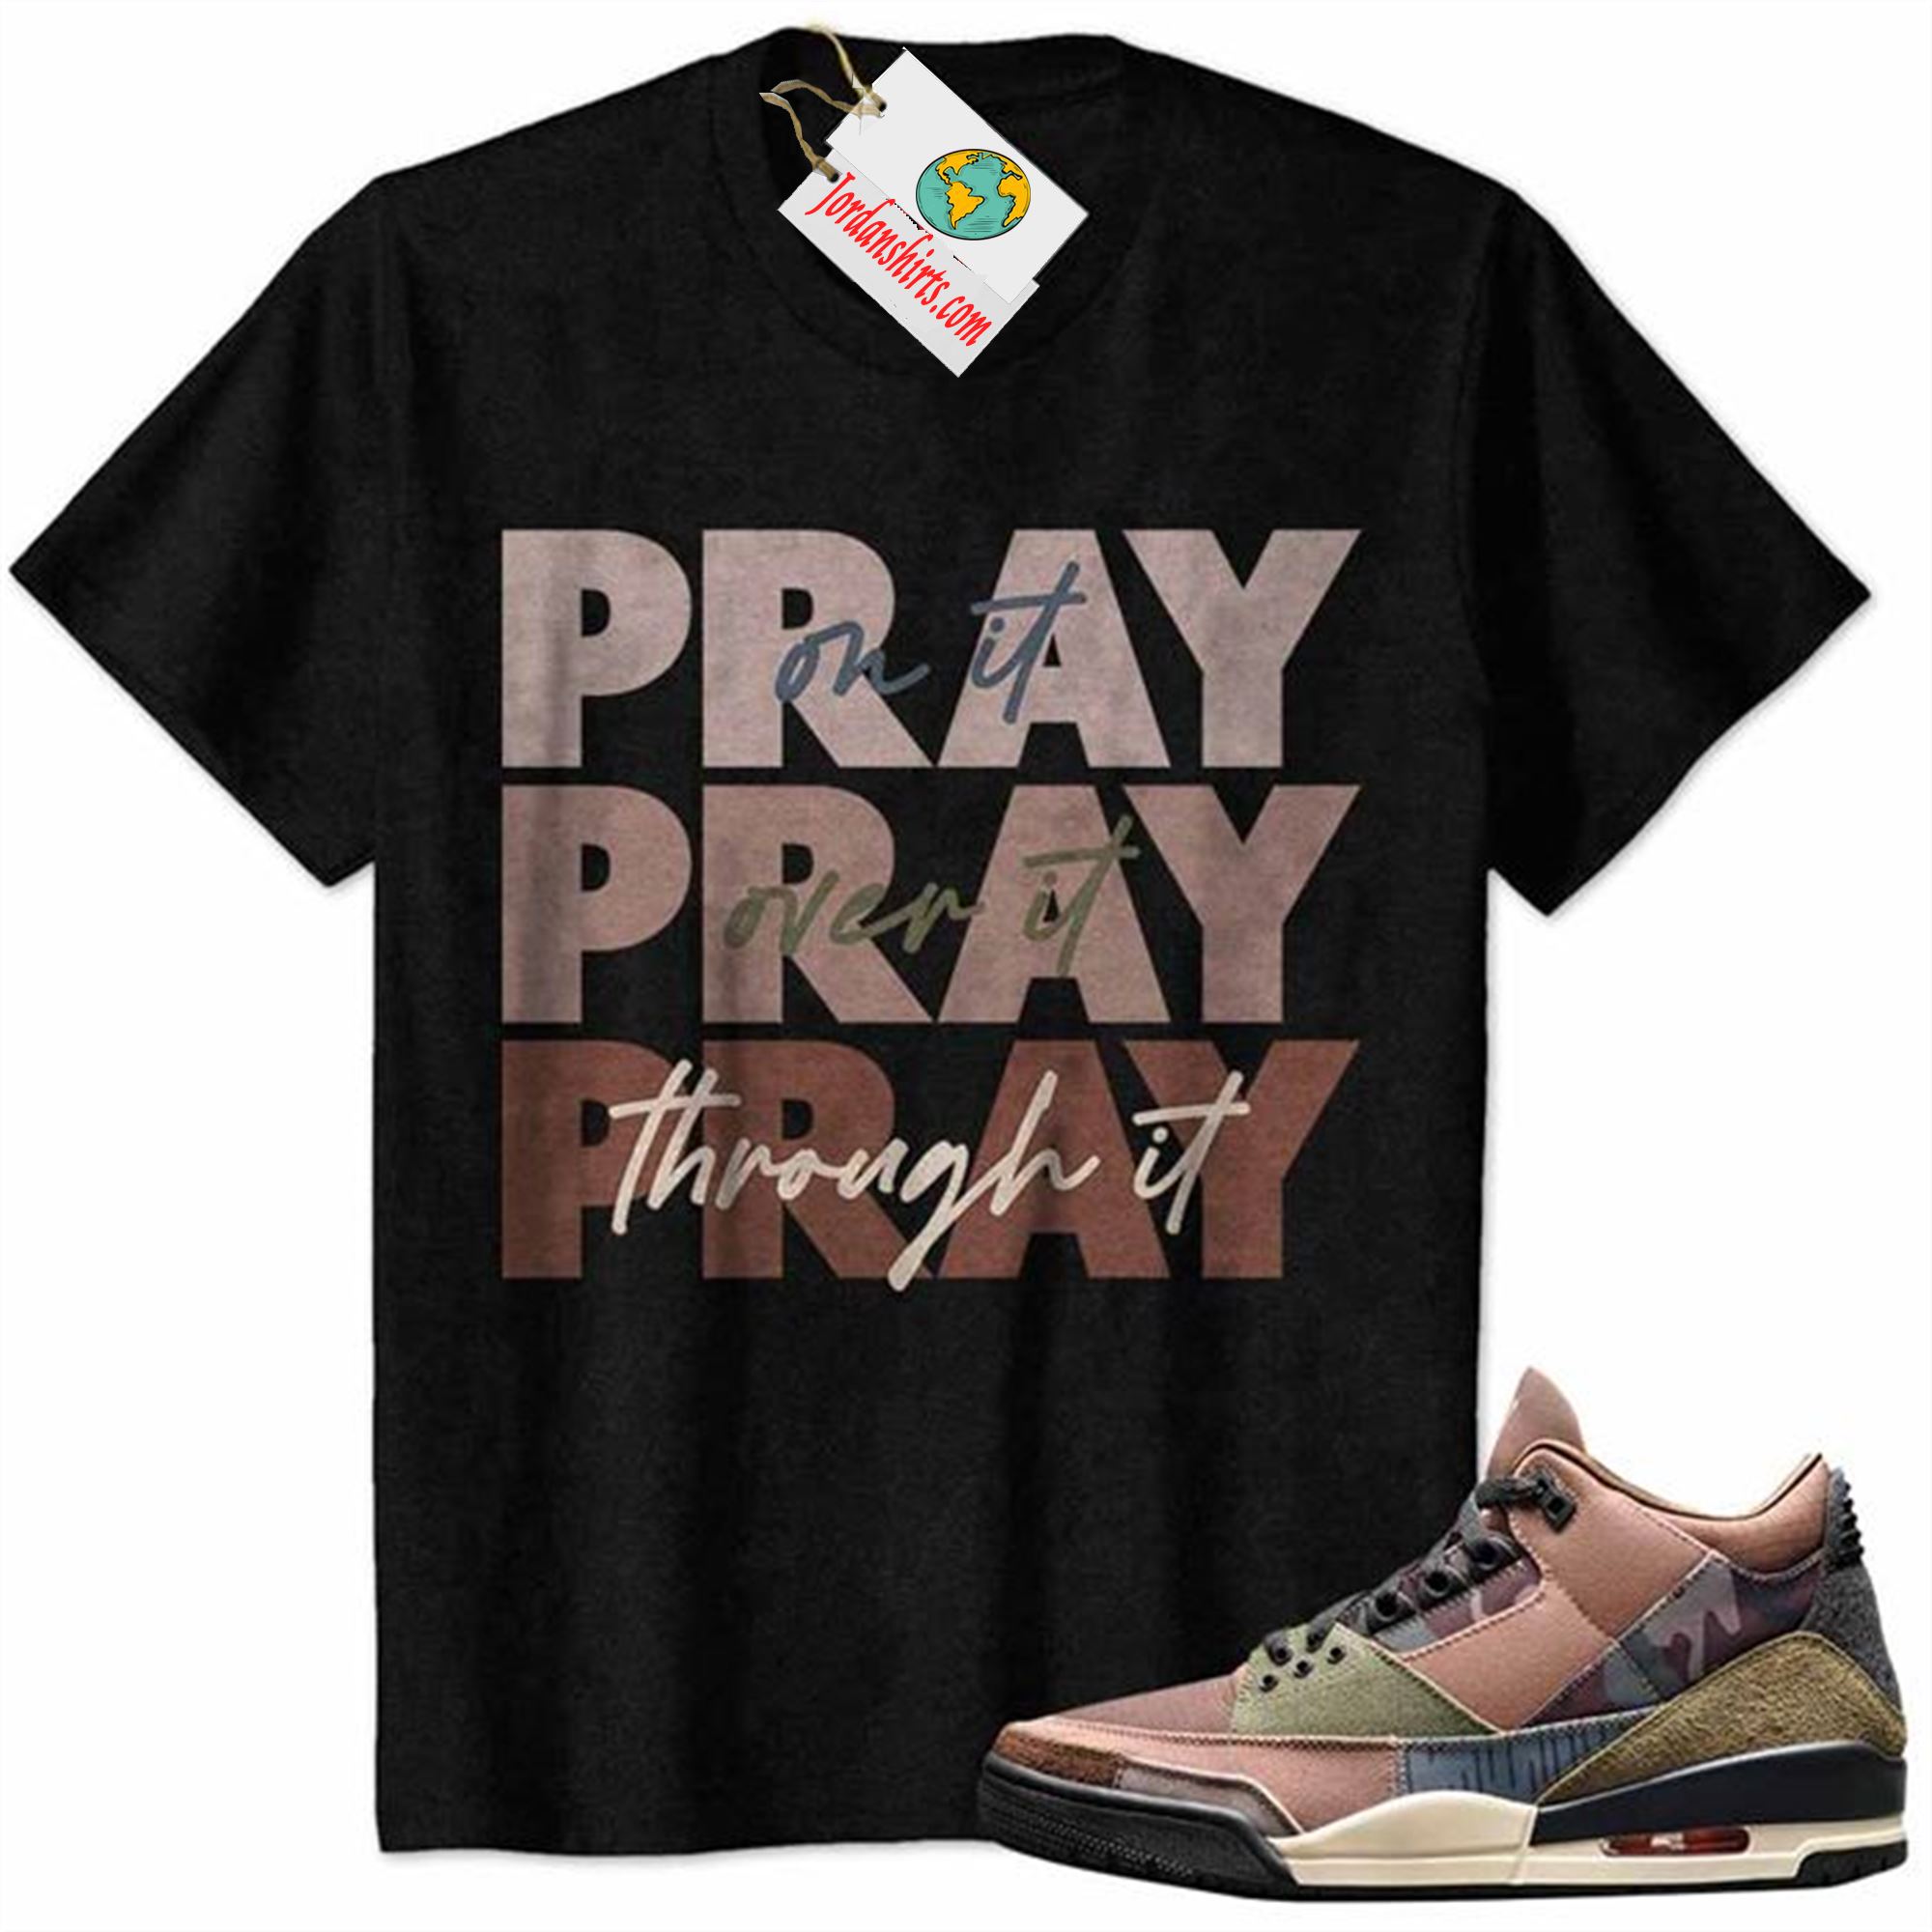 Jordan 3 Shirt, Pray On It Pray Over It Pray Through It Black Air Jordan 3 Camo 3s Size Up To 5xl